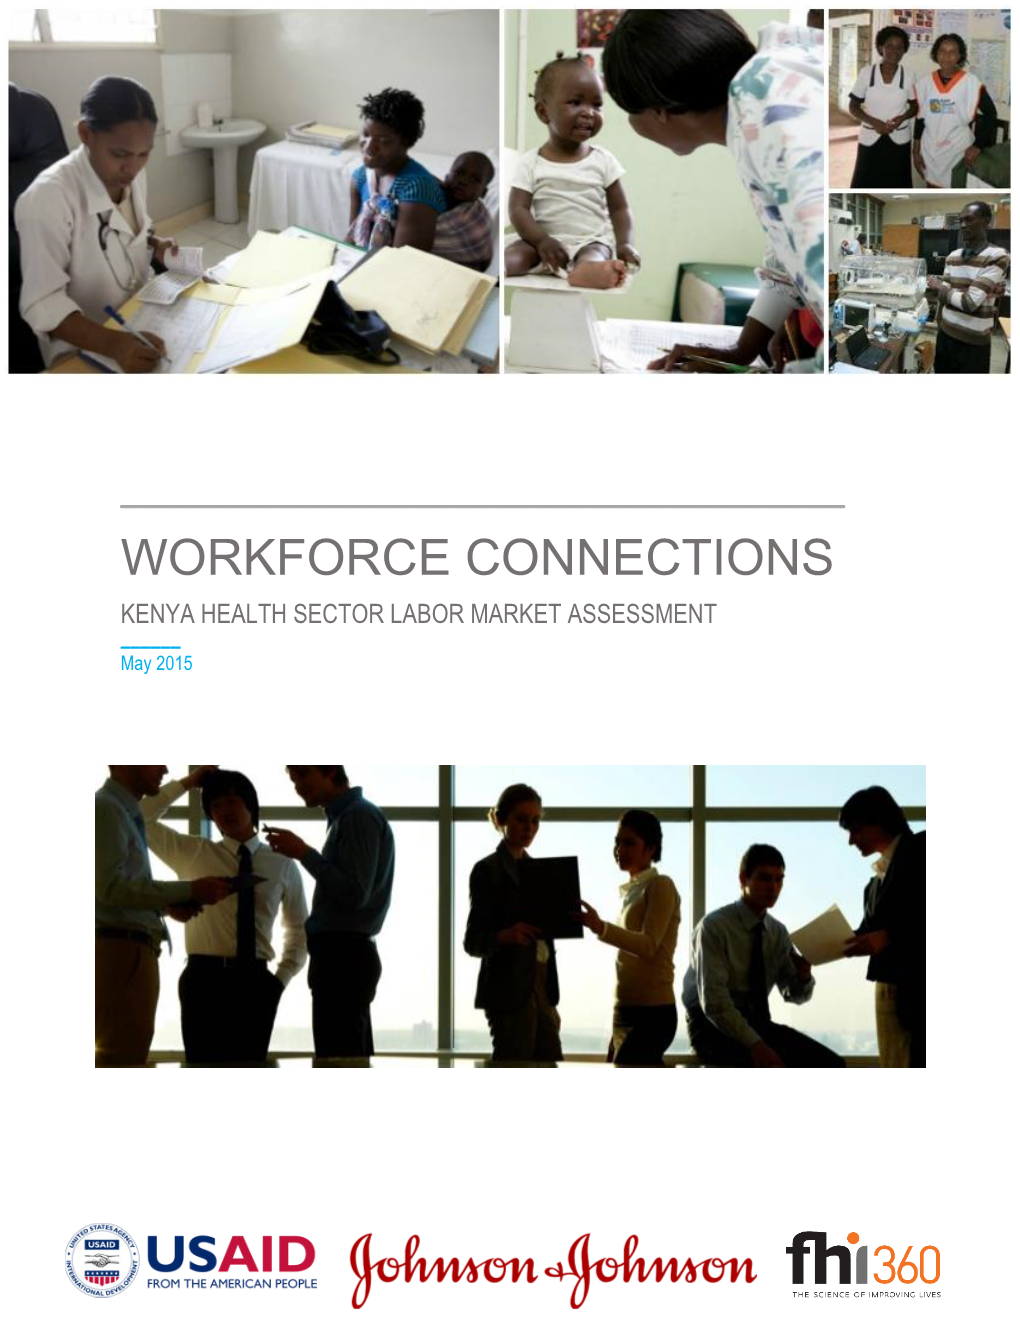 WORKFORCE CONNECTIONS: Kenya Health Sector Labor Market Assessment 1